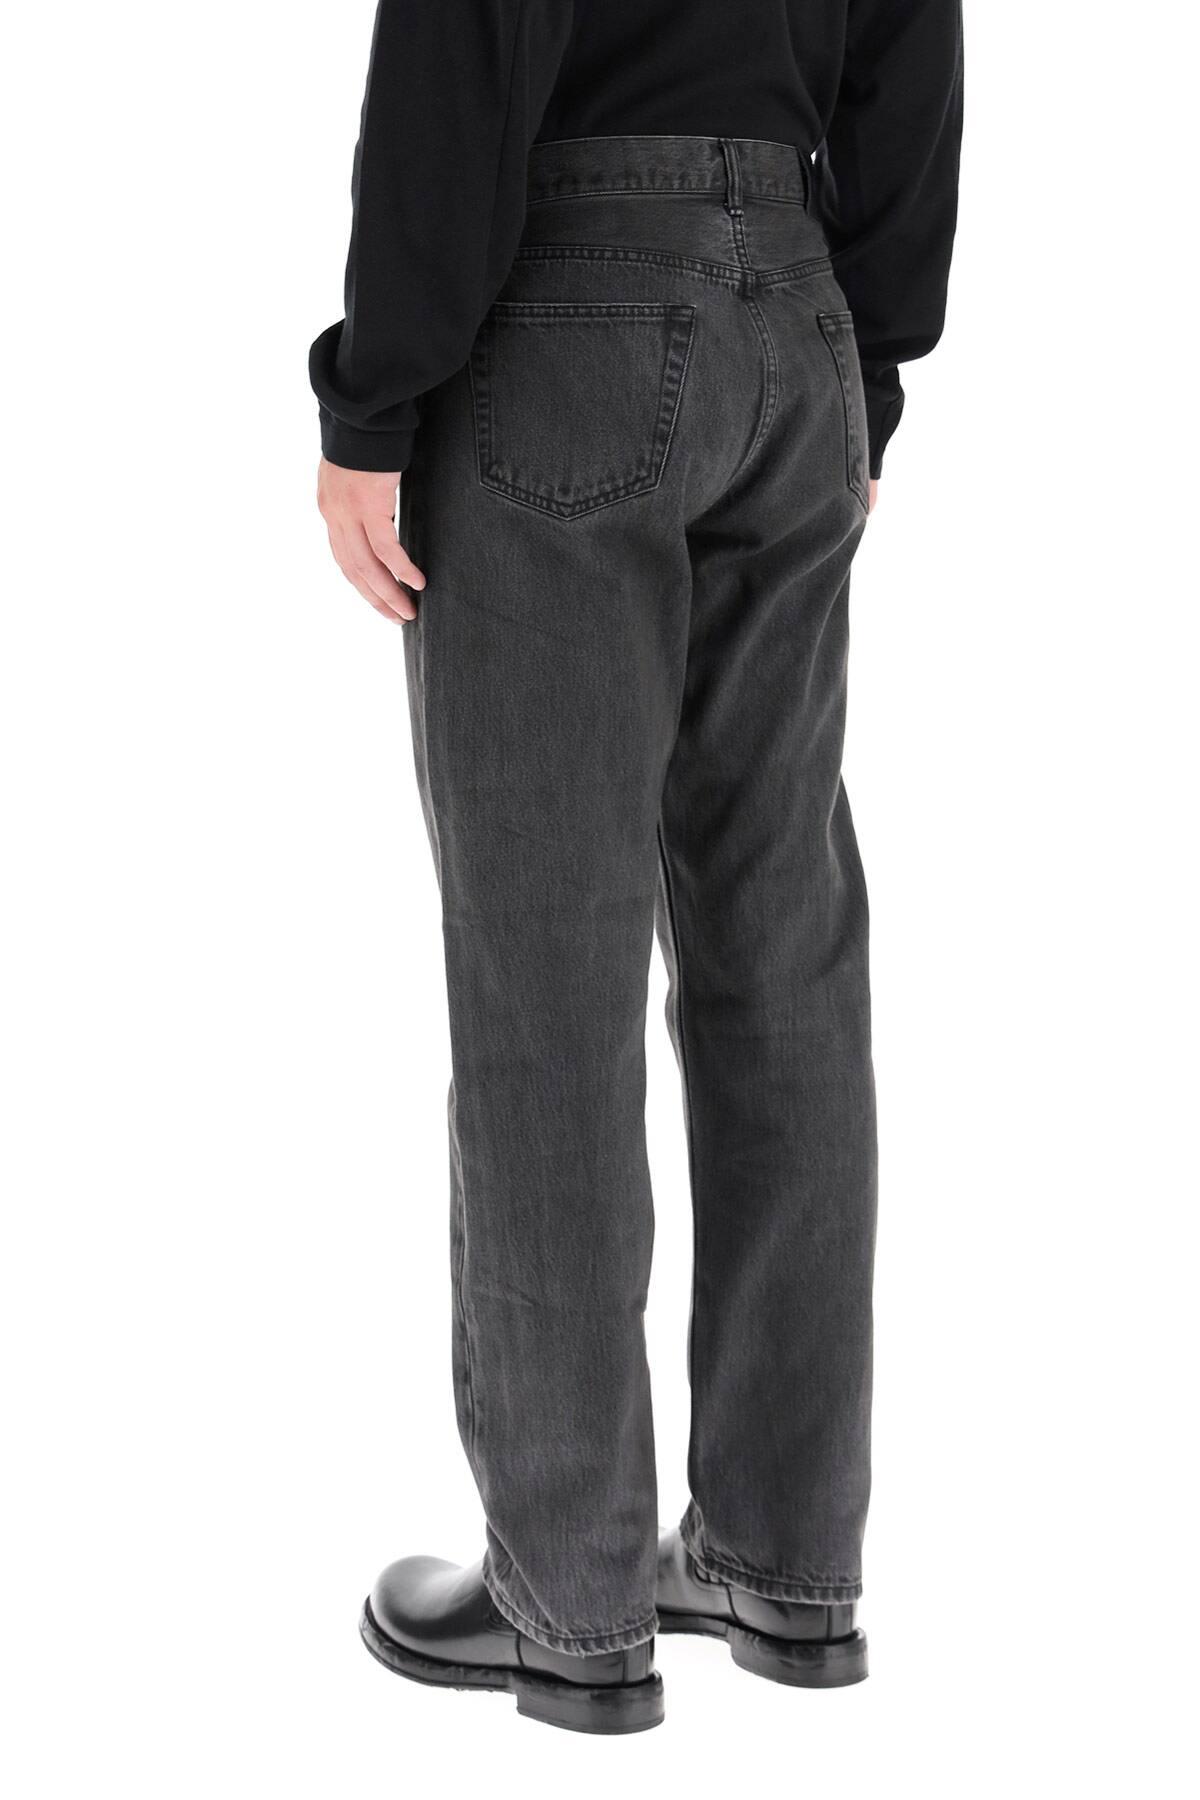 Ambush Regular Fit Denim Jeans in Black for Men - Lyst